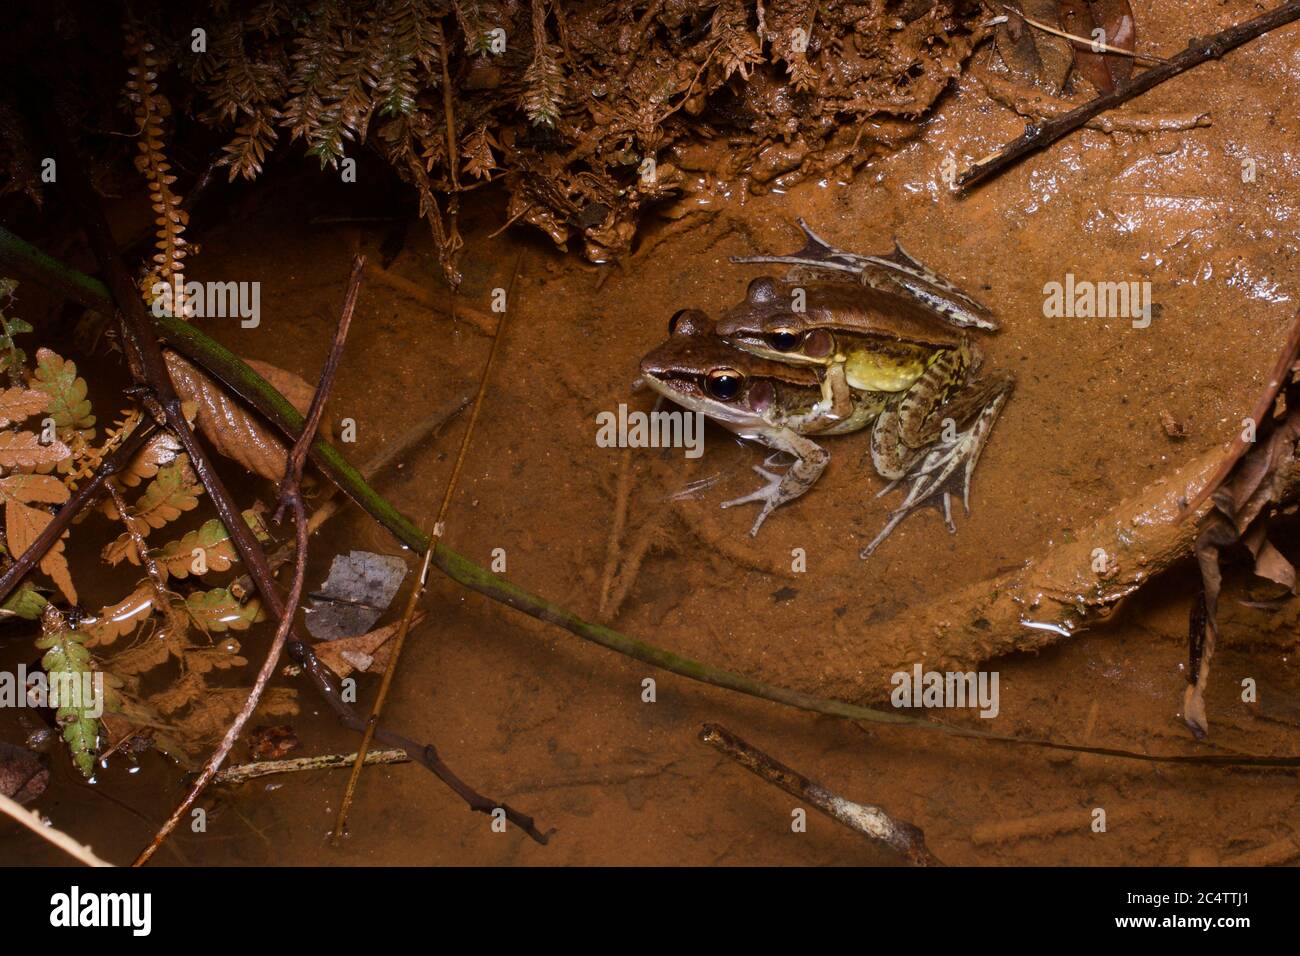 A breeding pair of Günther's Golden-backed Frogs (Indosylvirana temporalis) in a lowland stream near Sinharaja rainforest, Sri Lanka Stock Photo